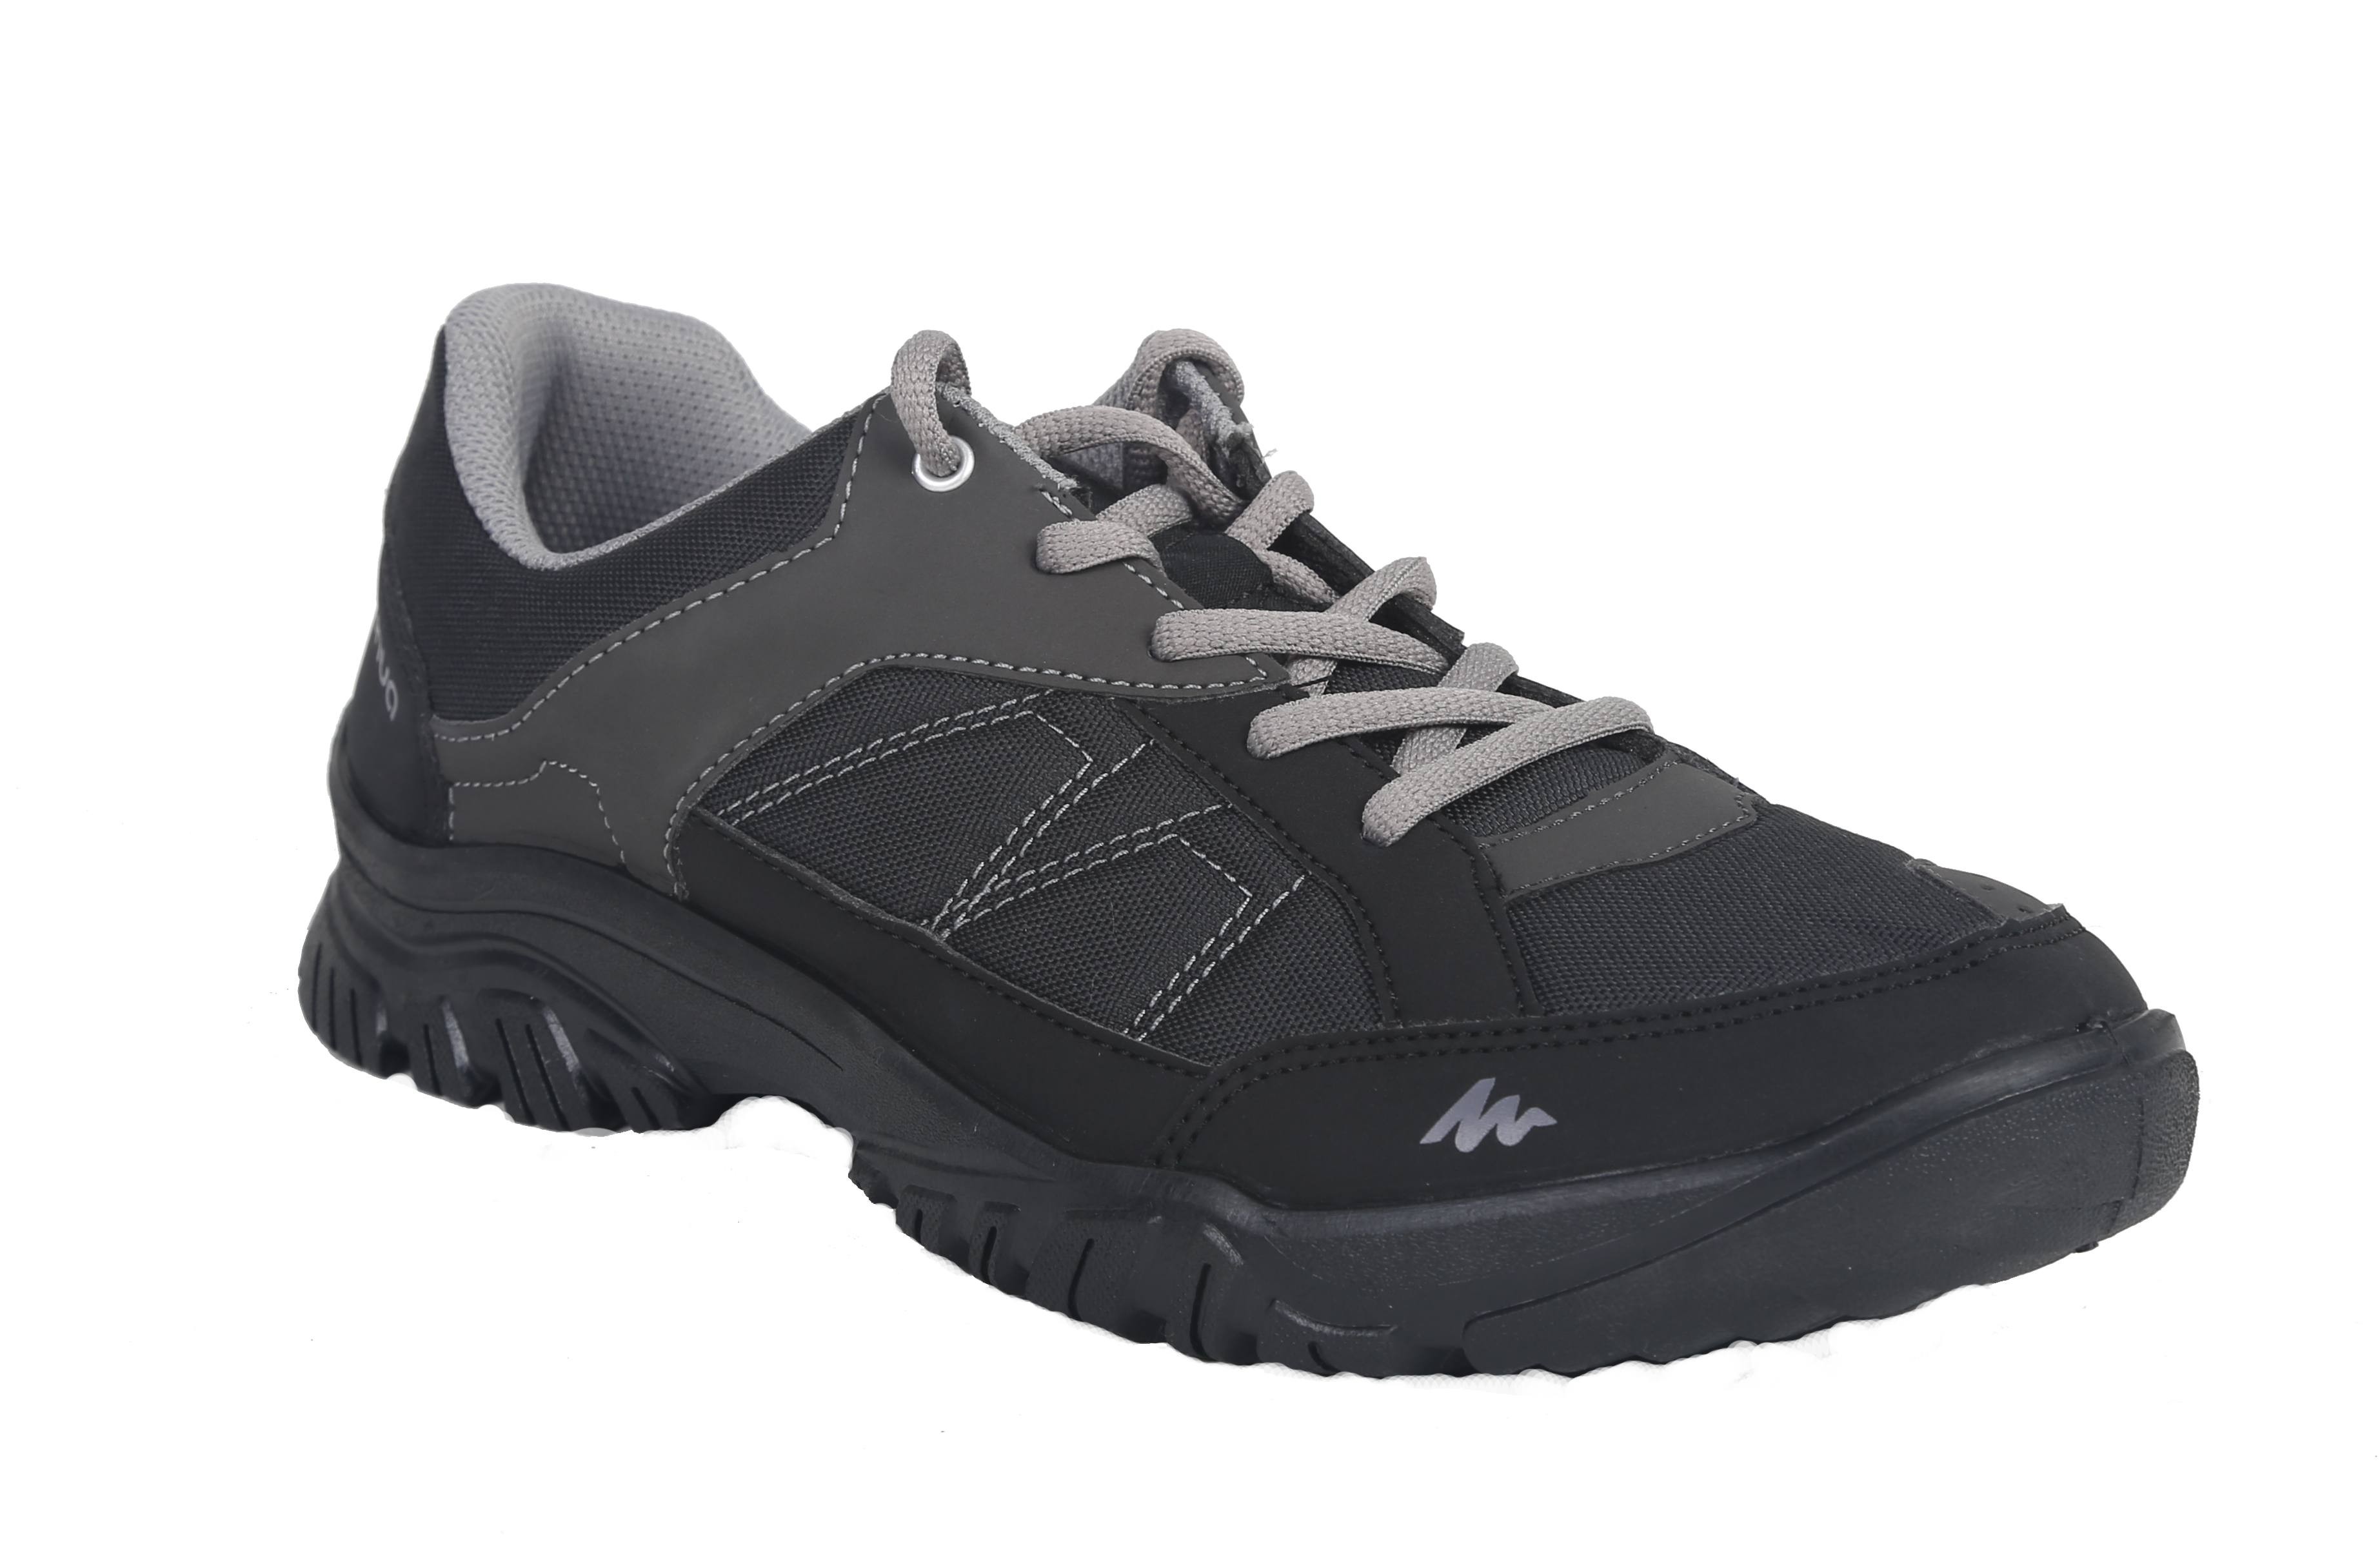 arpenaz-50-men-s-hiking-boots-black